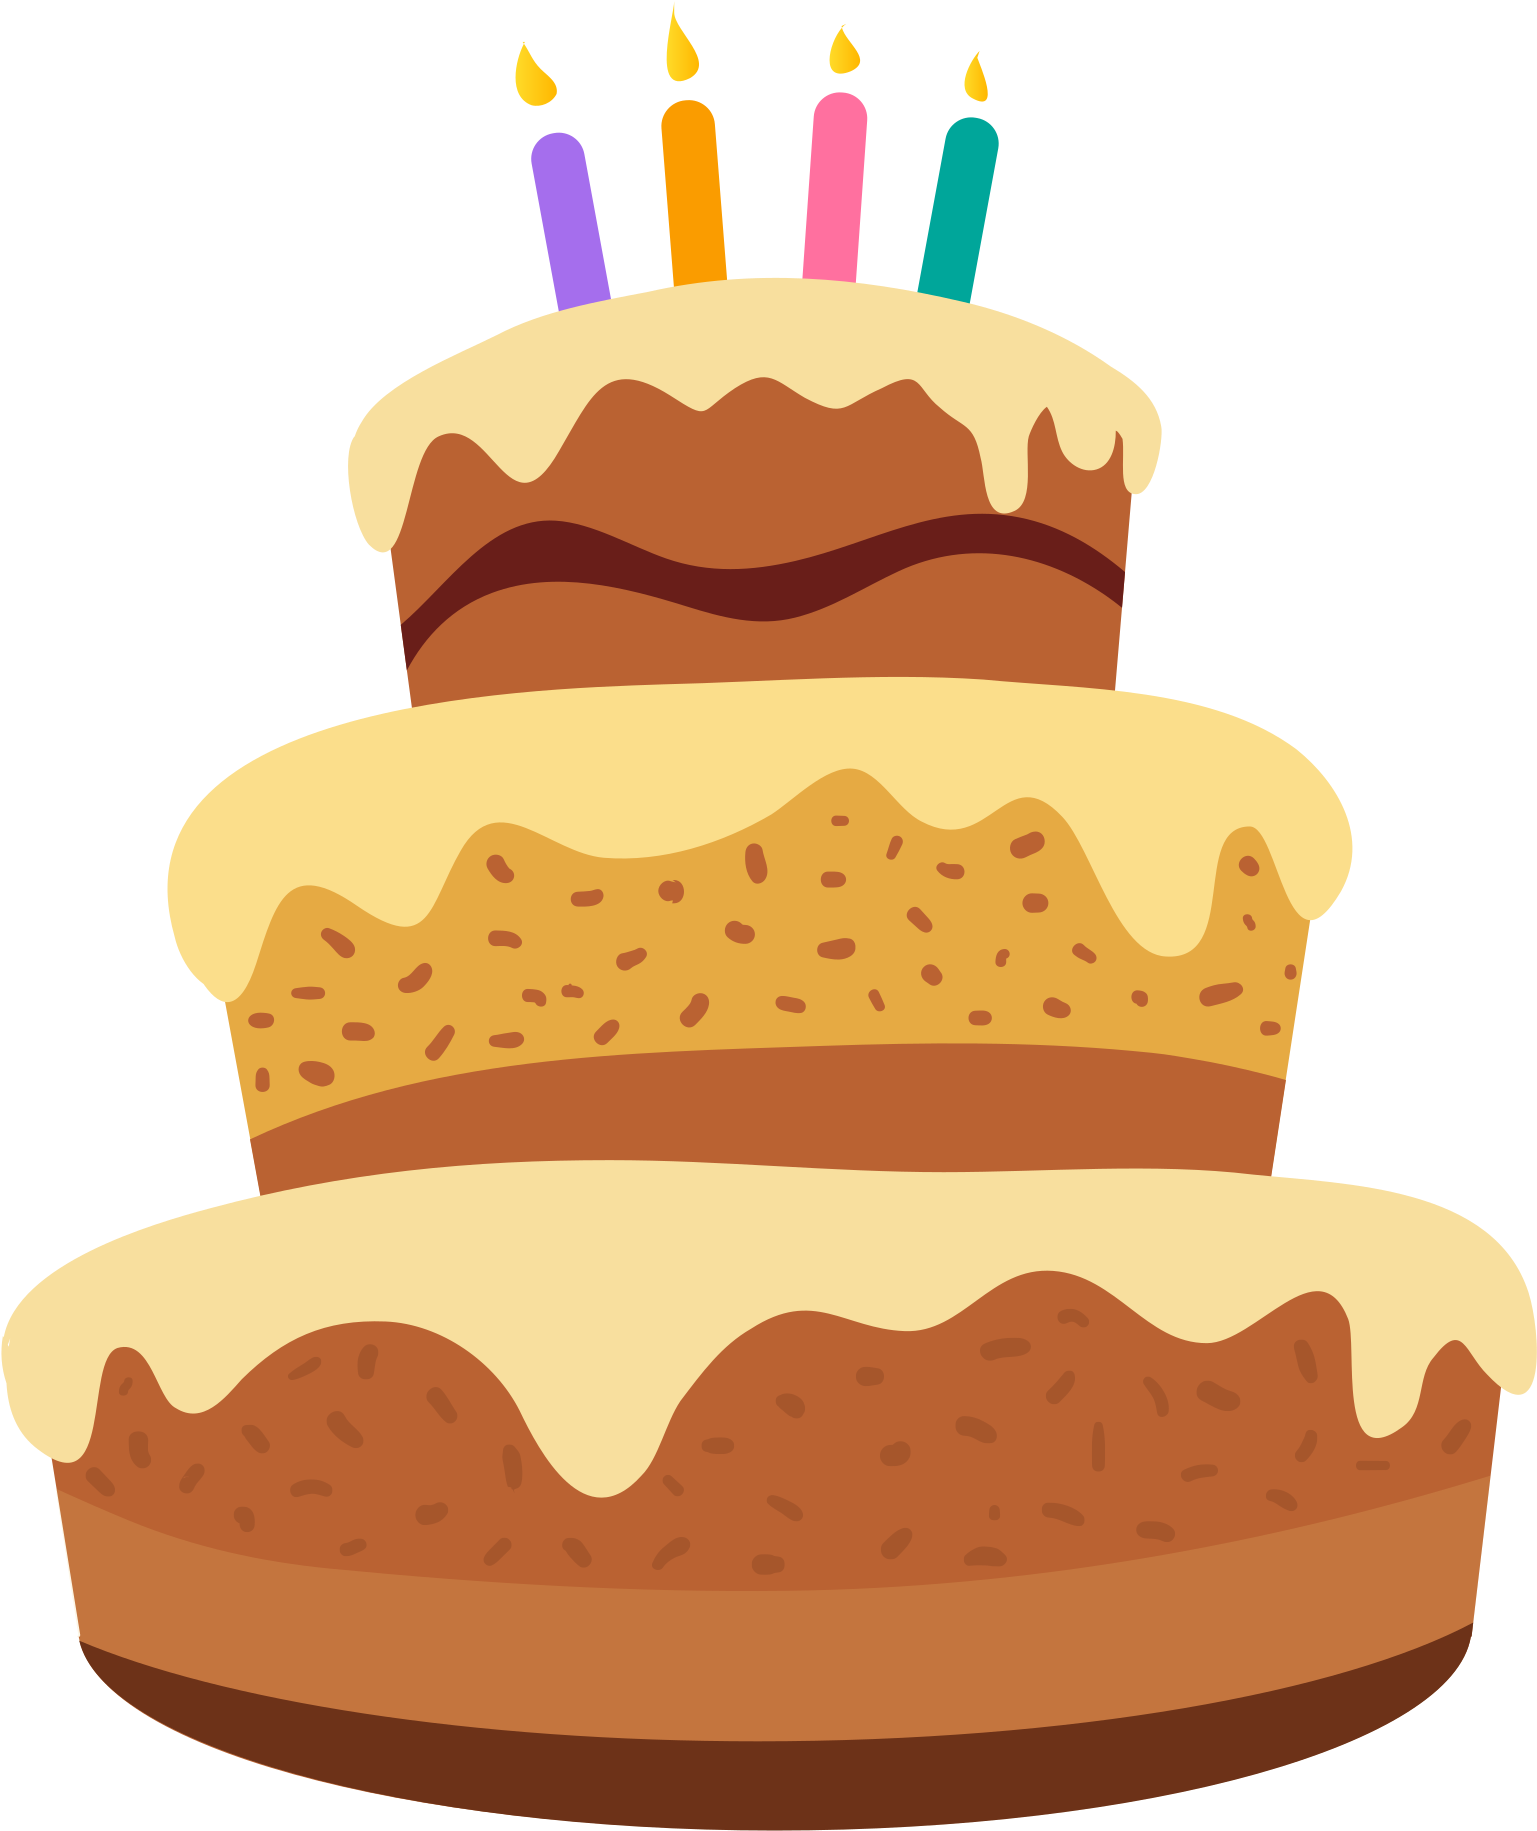 Chocolate Birthday Cake PNG Pic Background